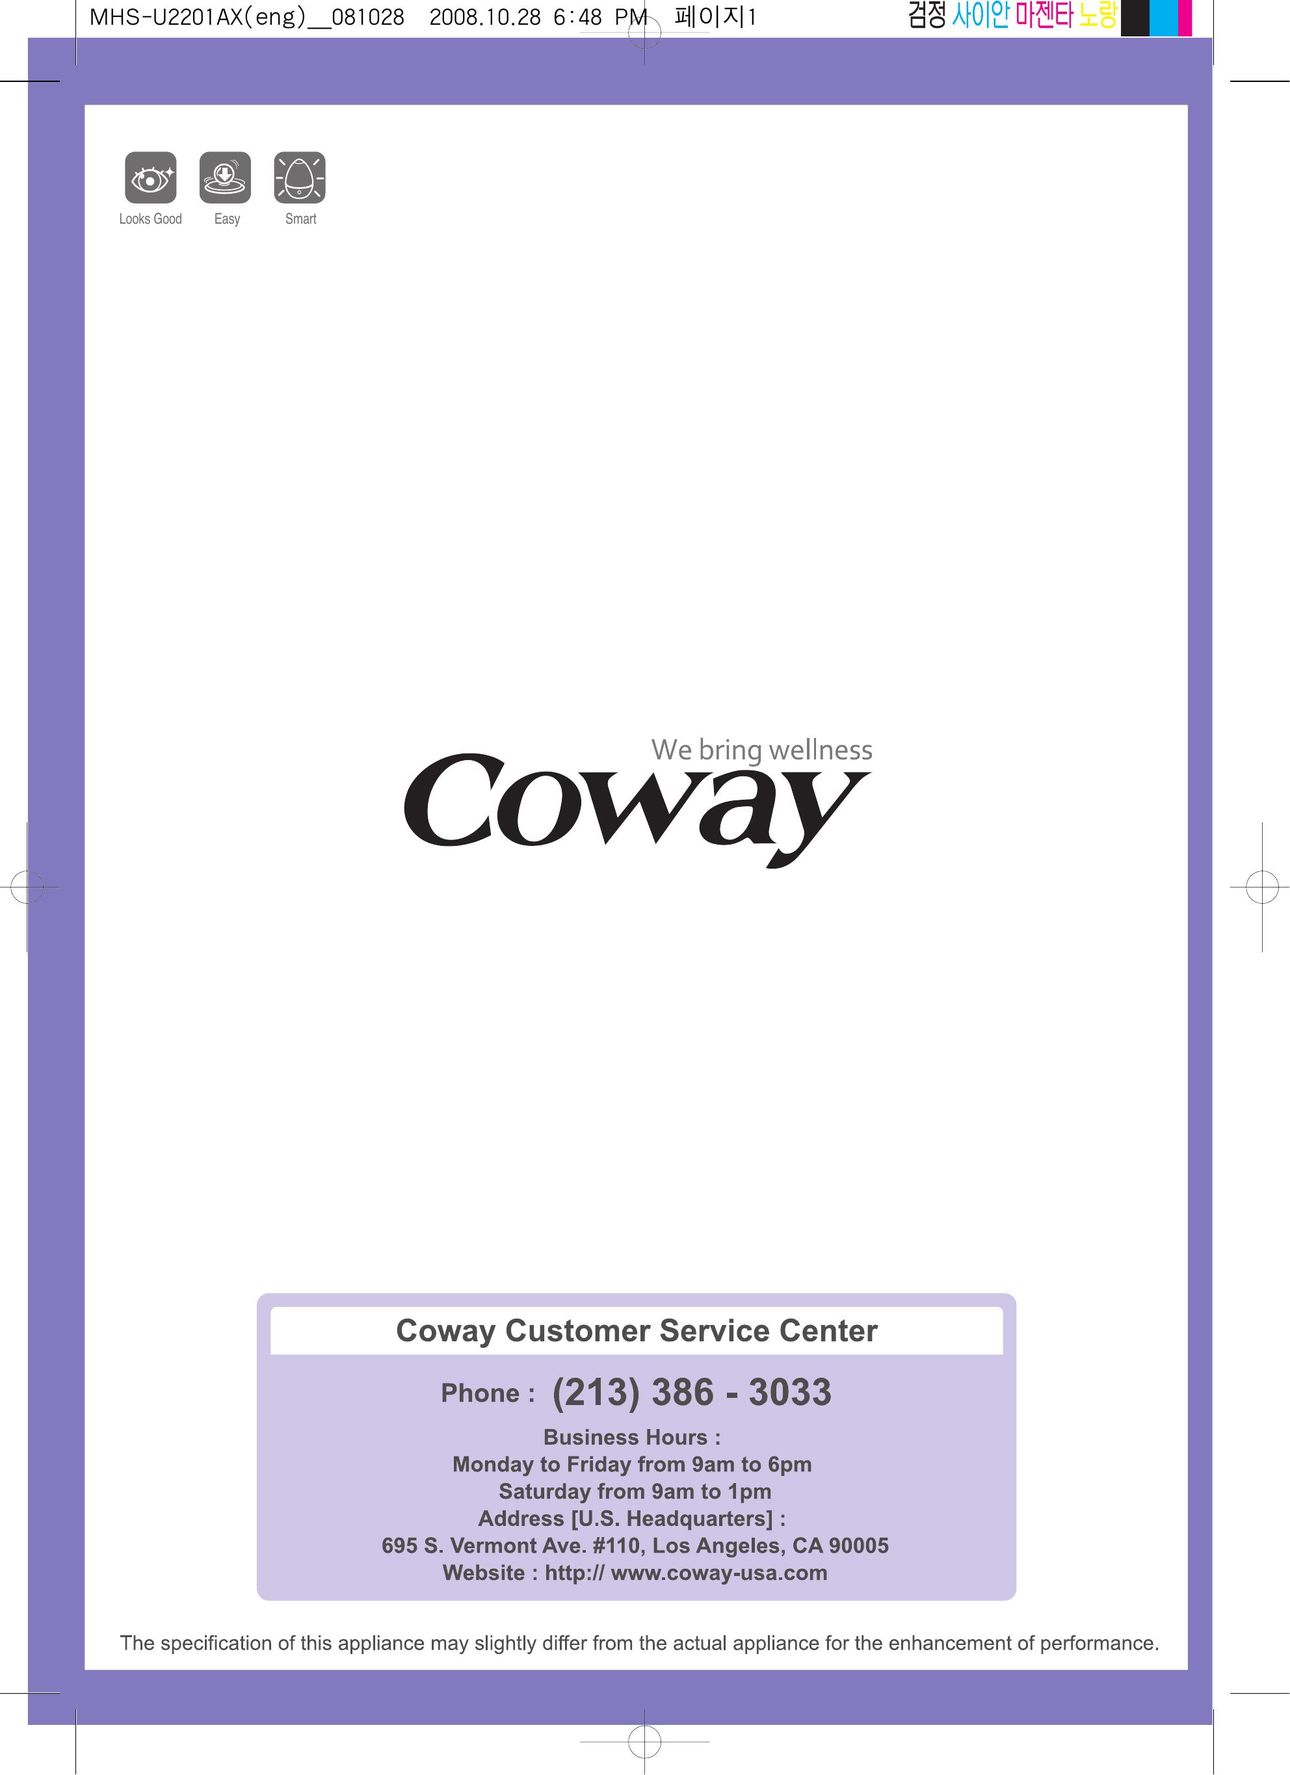 Coway MHS-U2201AX Humidifier User Manual